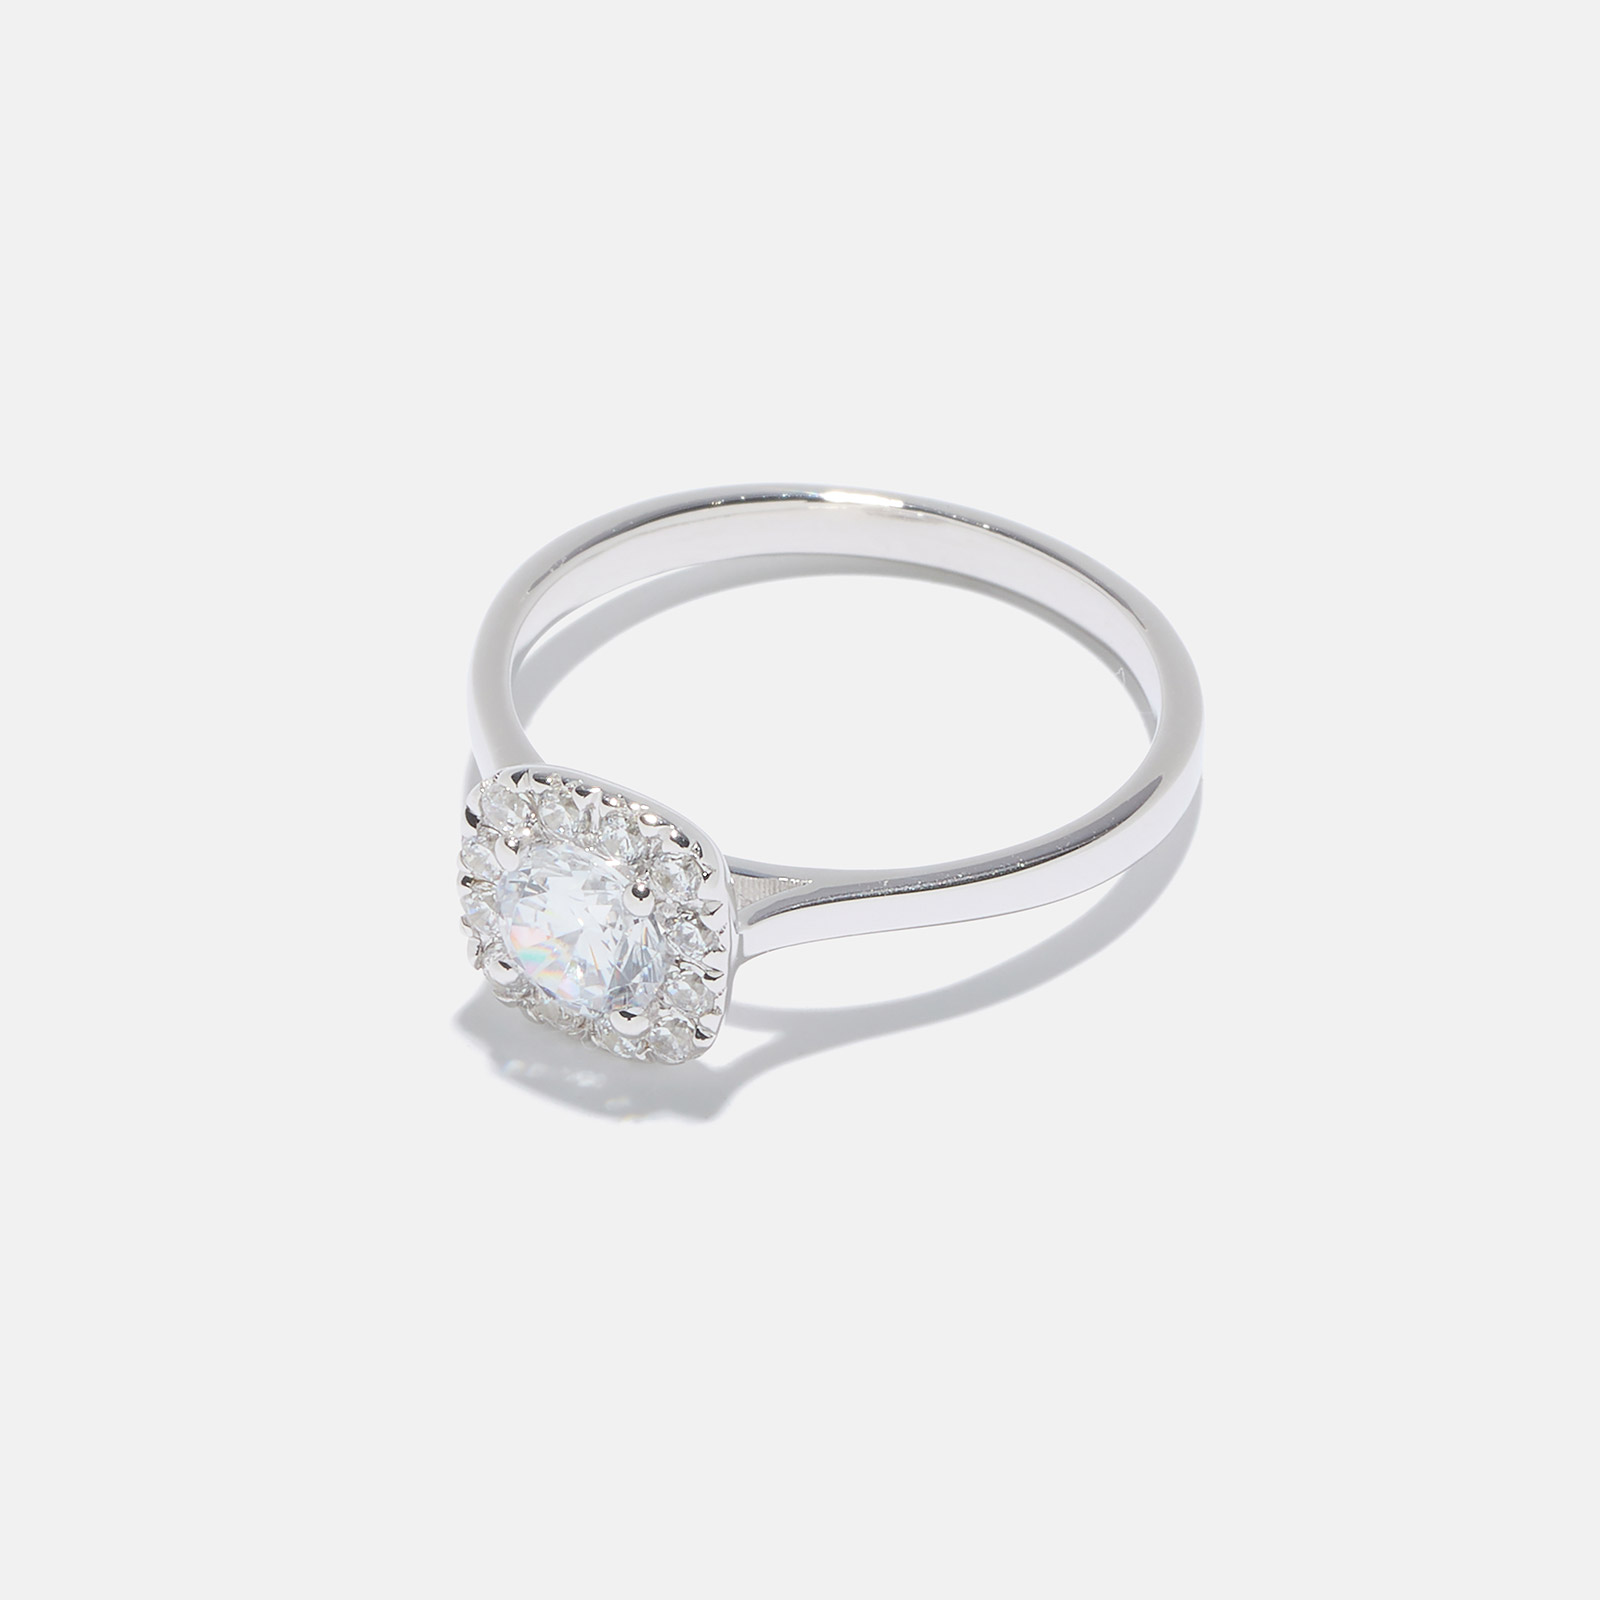 Ring Maria - 18k vitguld, labbodlade diamanter 0,5 carat